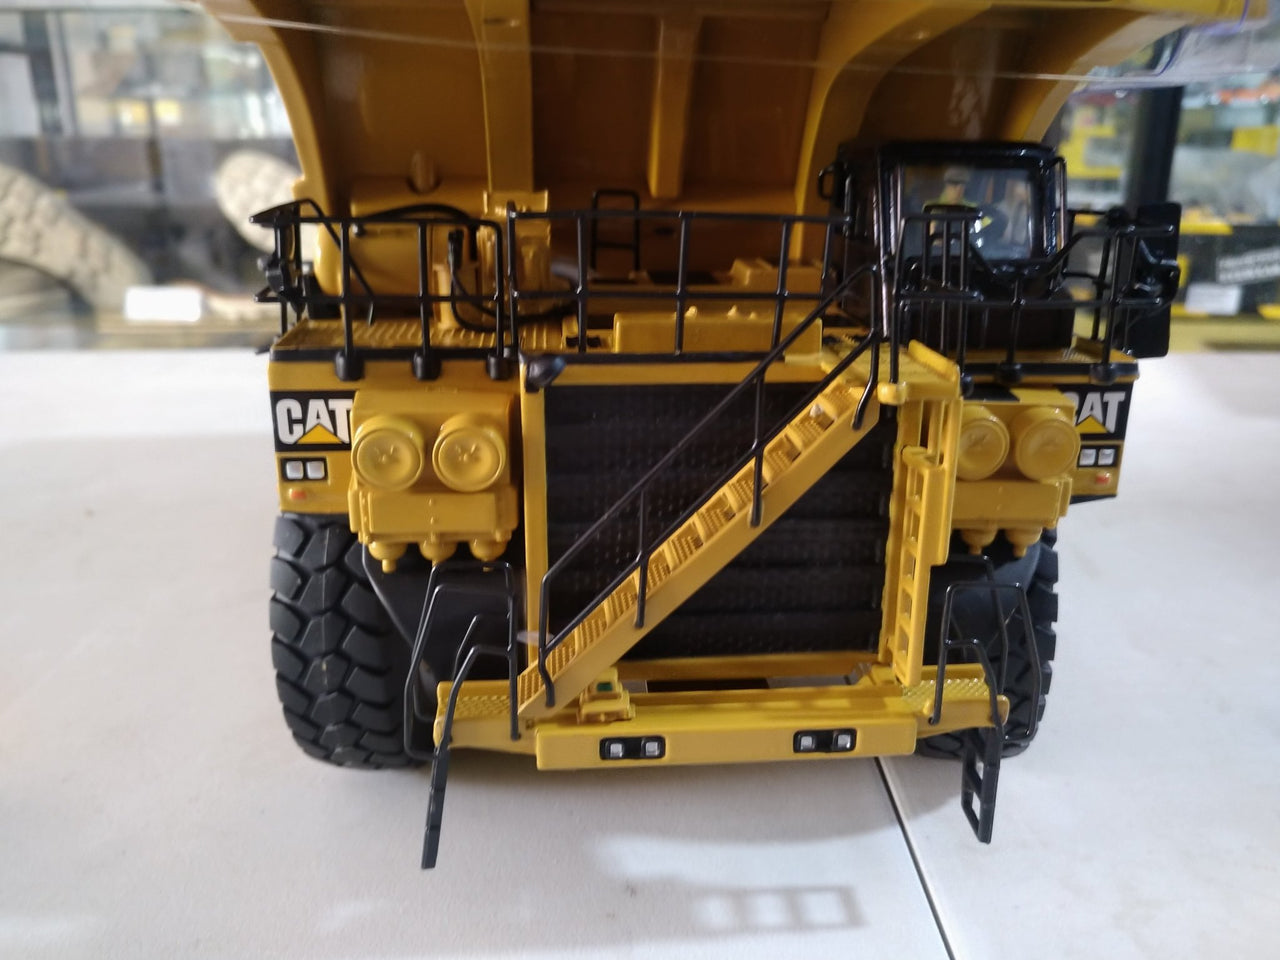 85174C Caterpillar 793D Mining Truck 1:50 Scale (Discontinued Model)